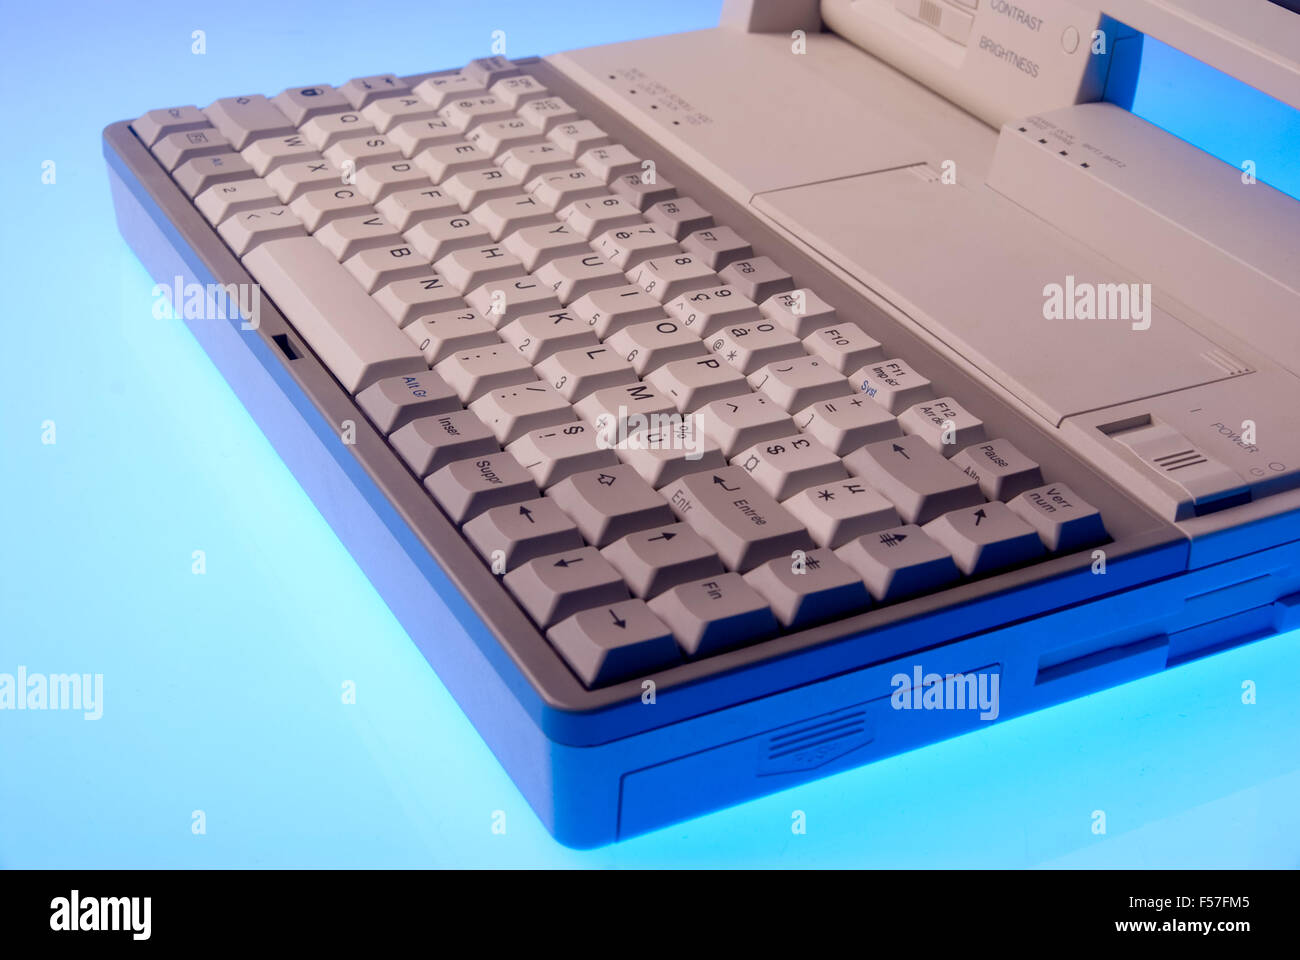 azerty laptop keyboard in blue light Stock Photo